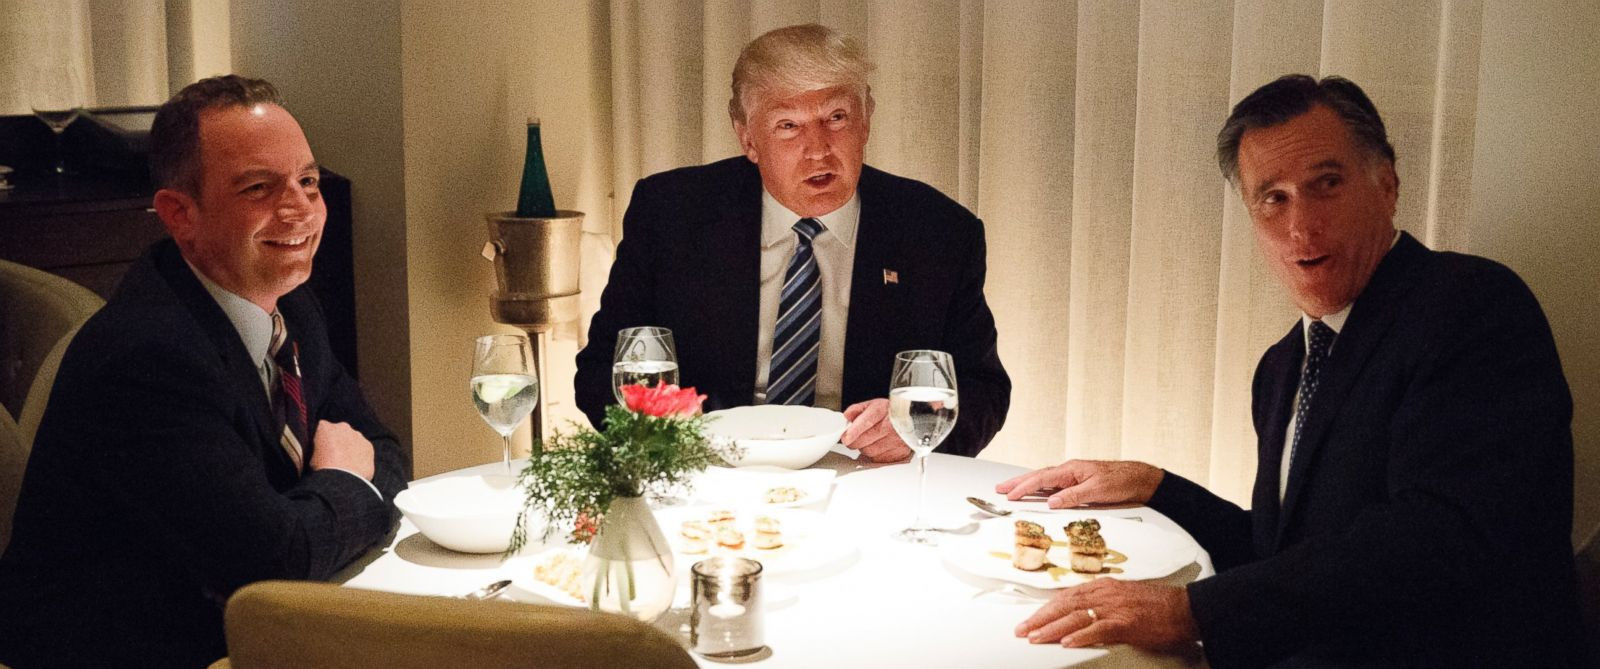 Trump Romney Dinner
 Mitt Romney Donald Trump Dine at Exclusive NYC Restaurant